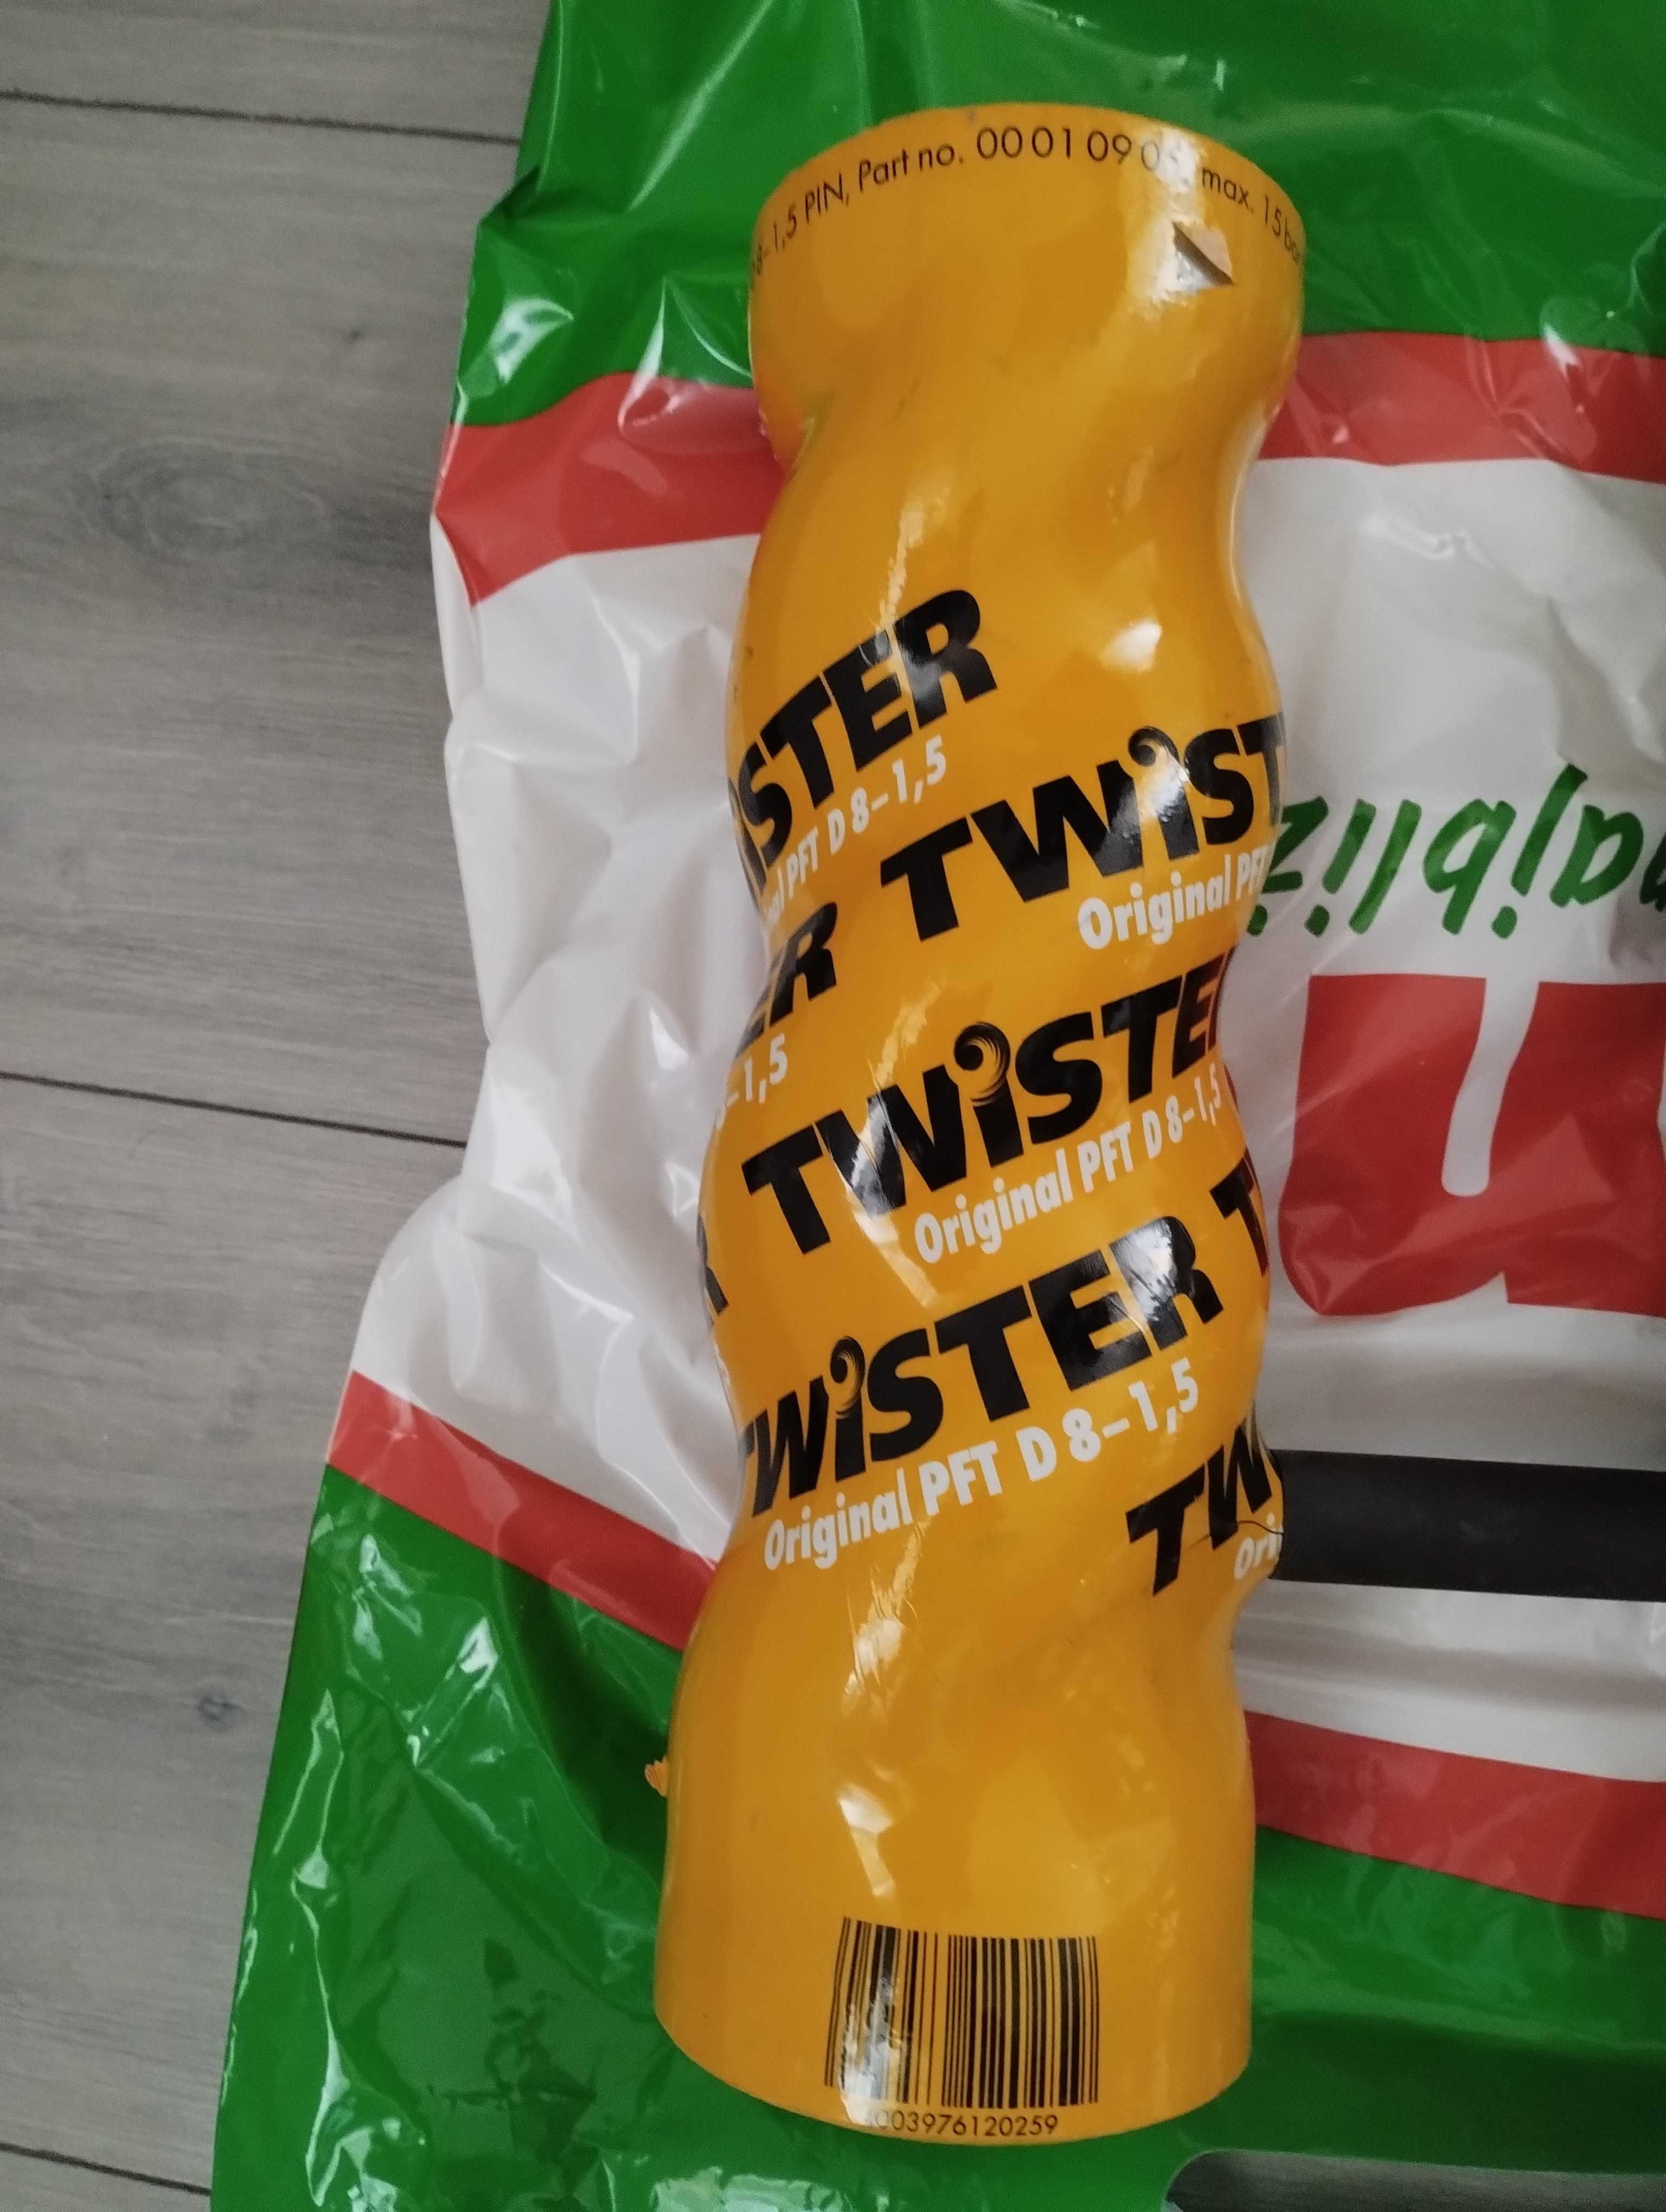 Twister stator d8 1-5